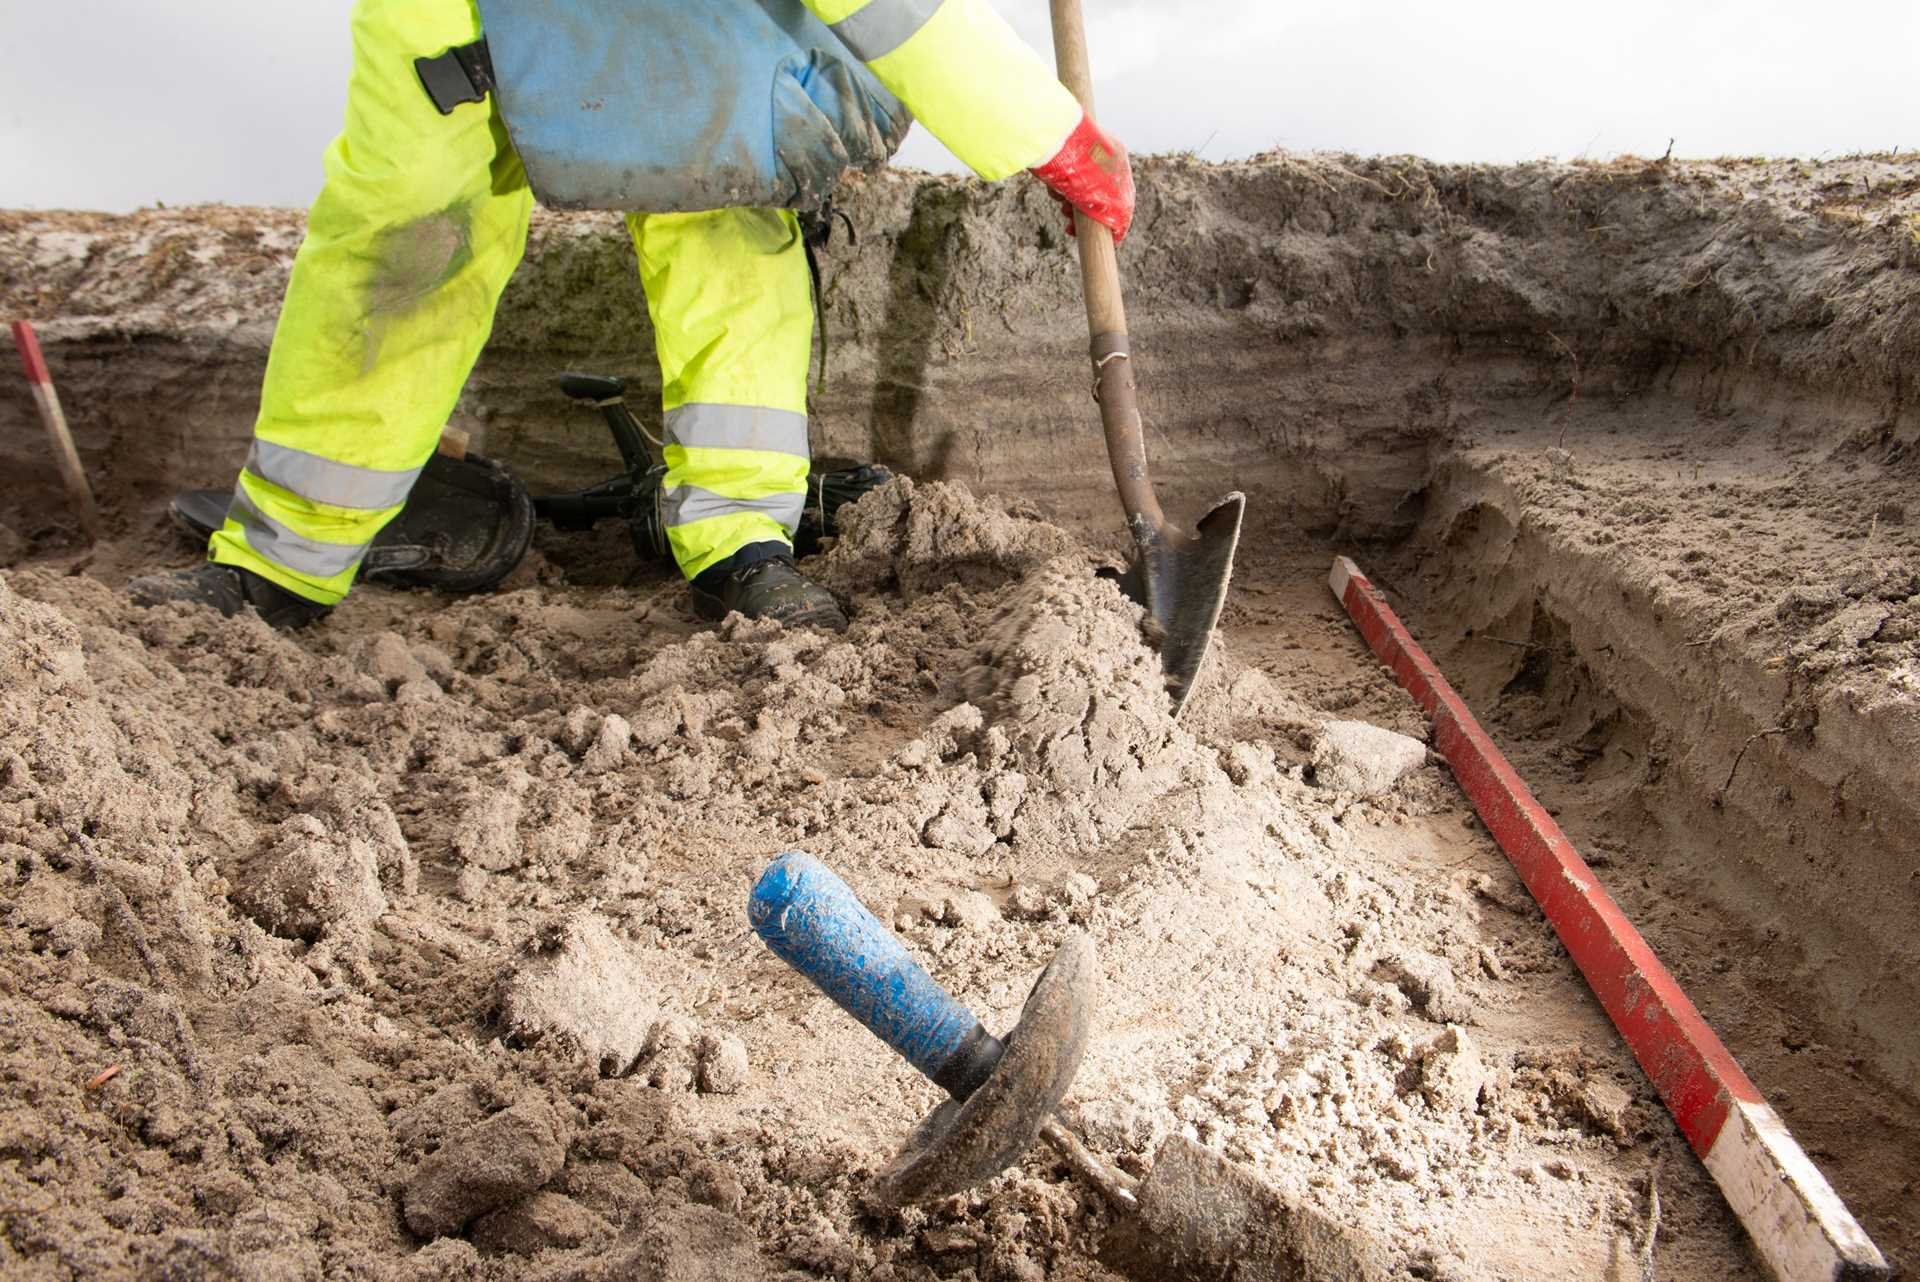 A Zimbabwean de-miner digging to remove landmines in the Falkland Islands